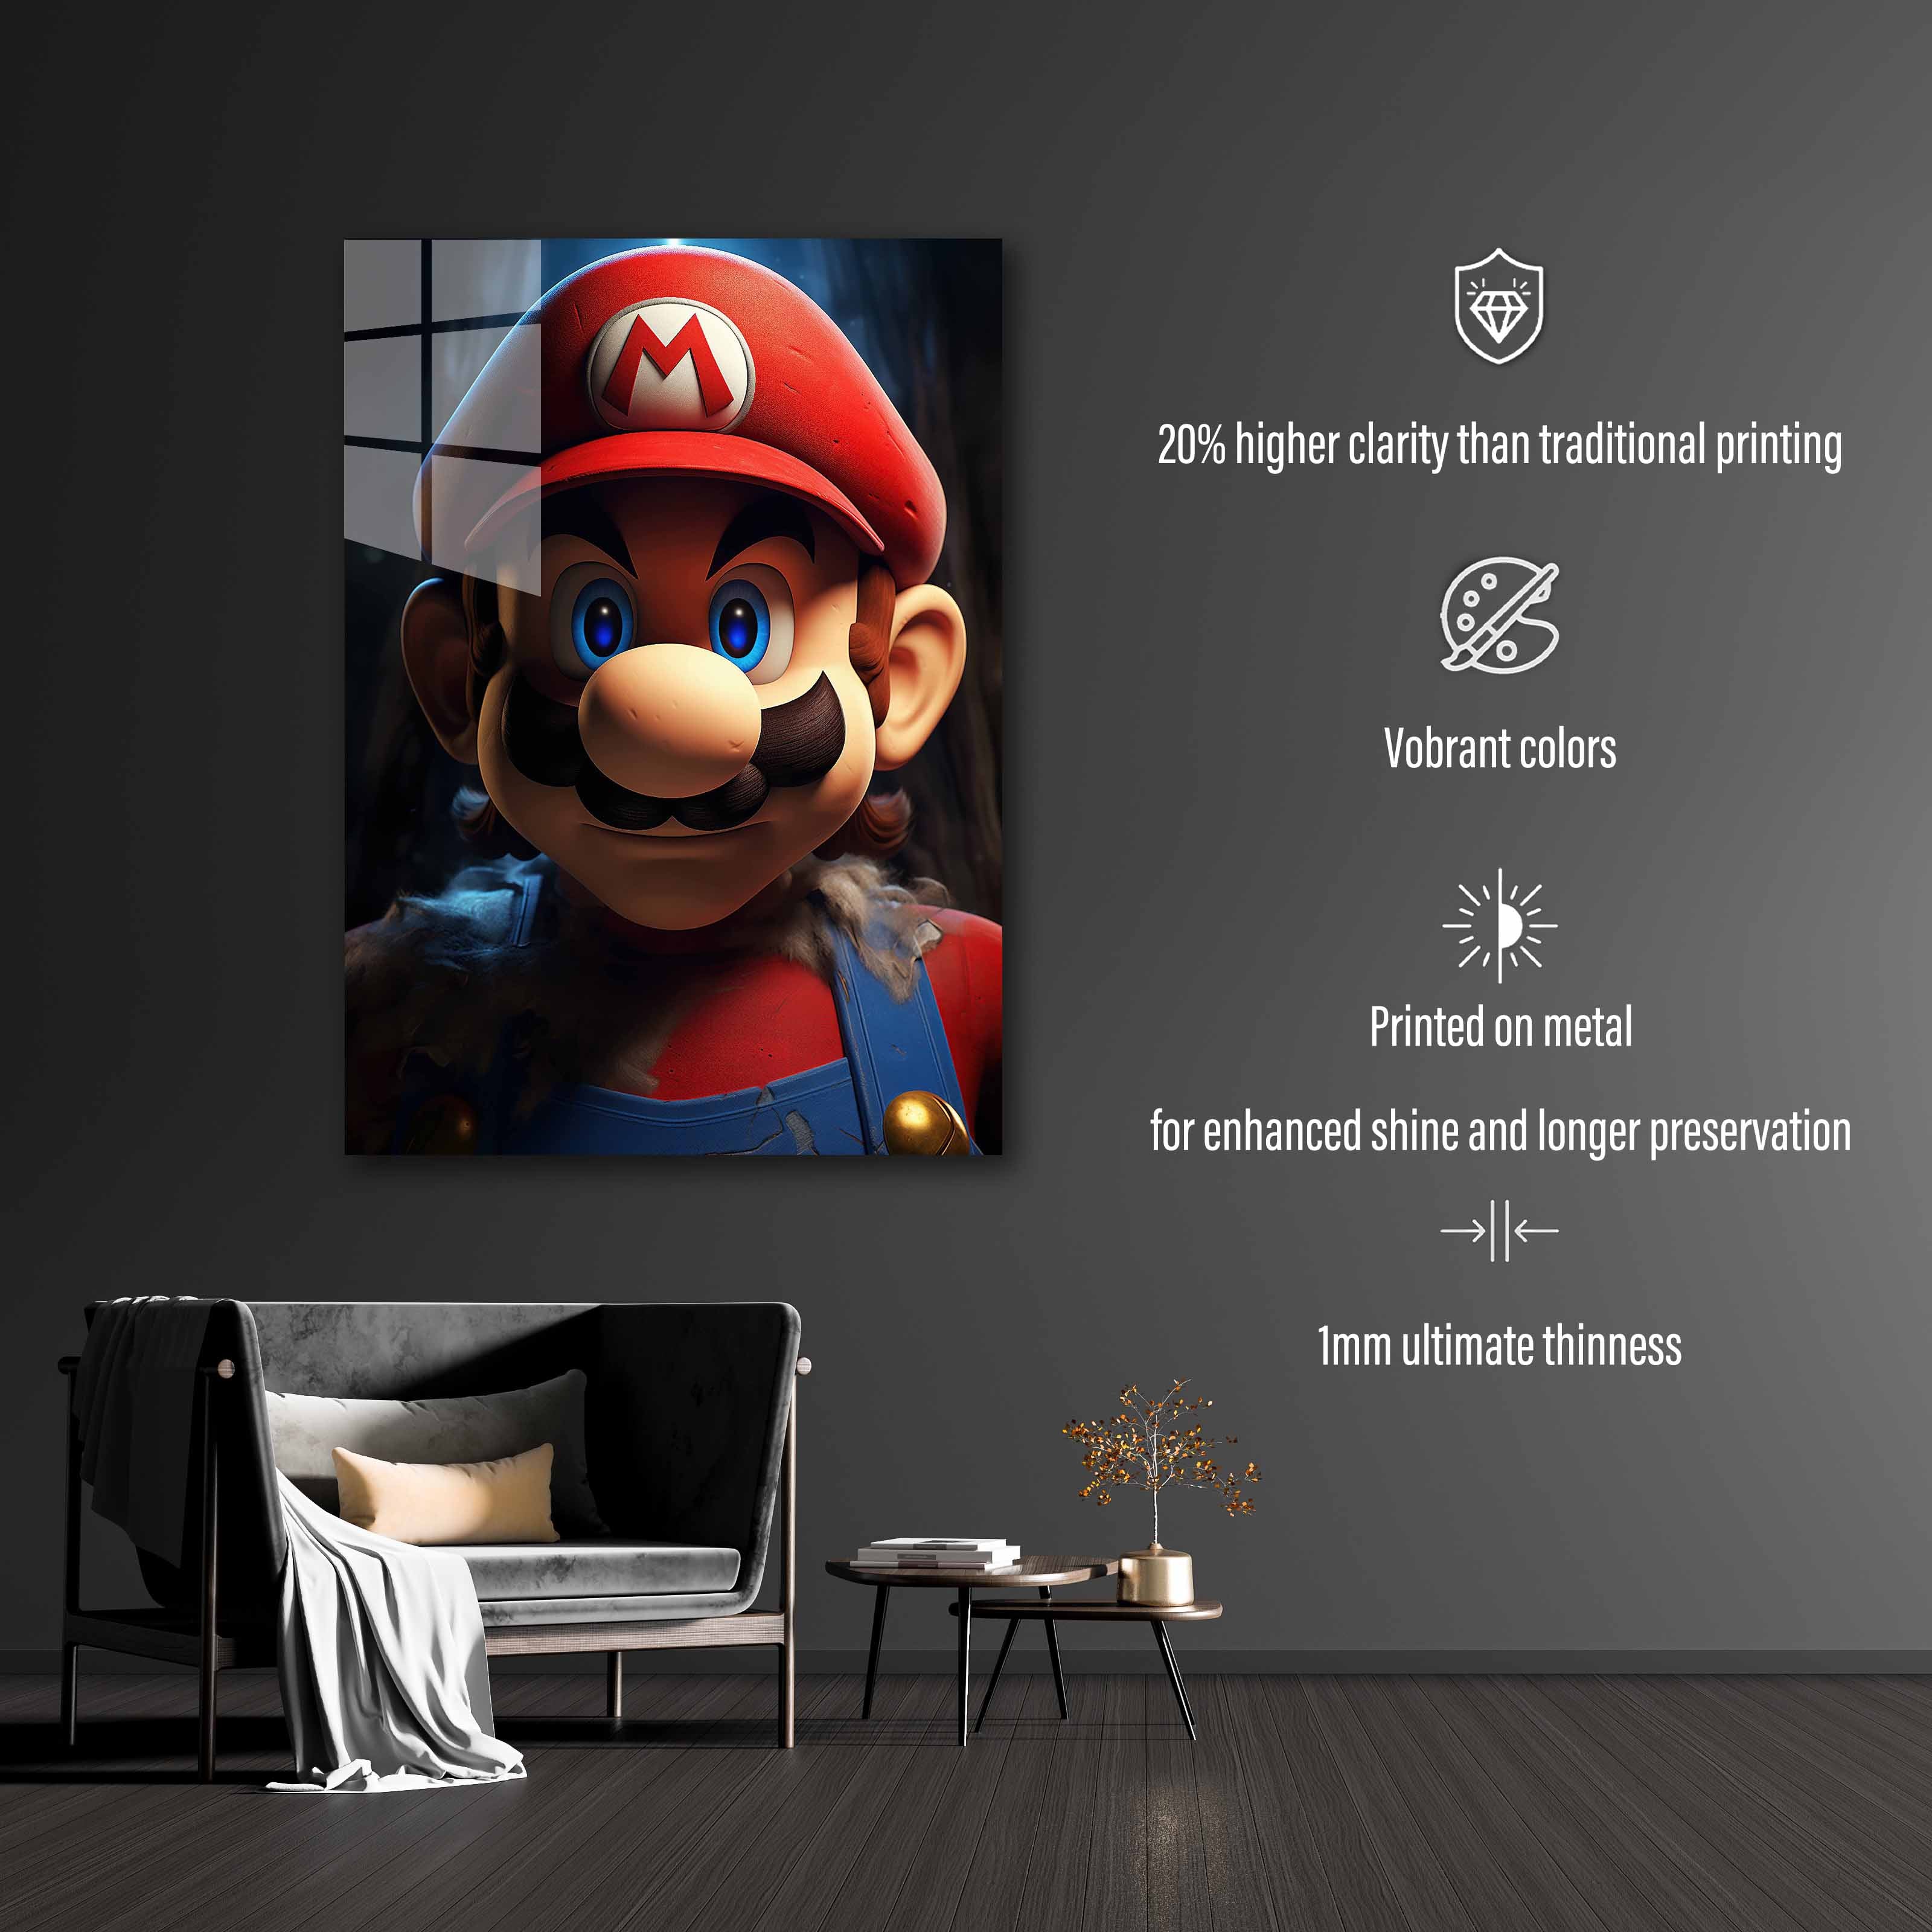 Super Mario Gaming 10-designed by @SAMCRO